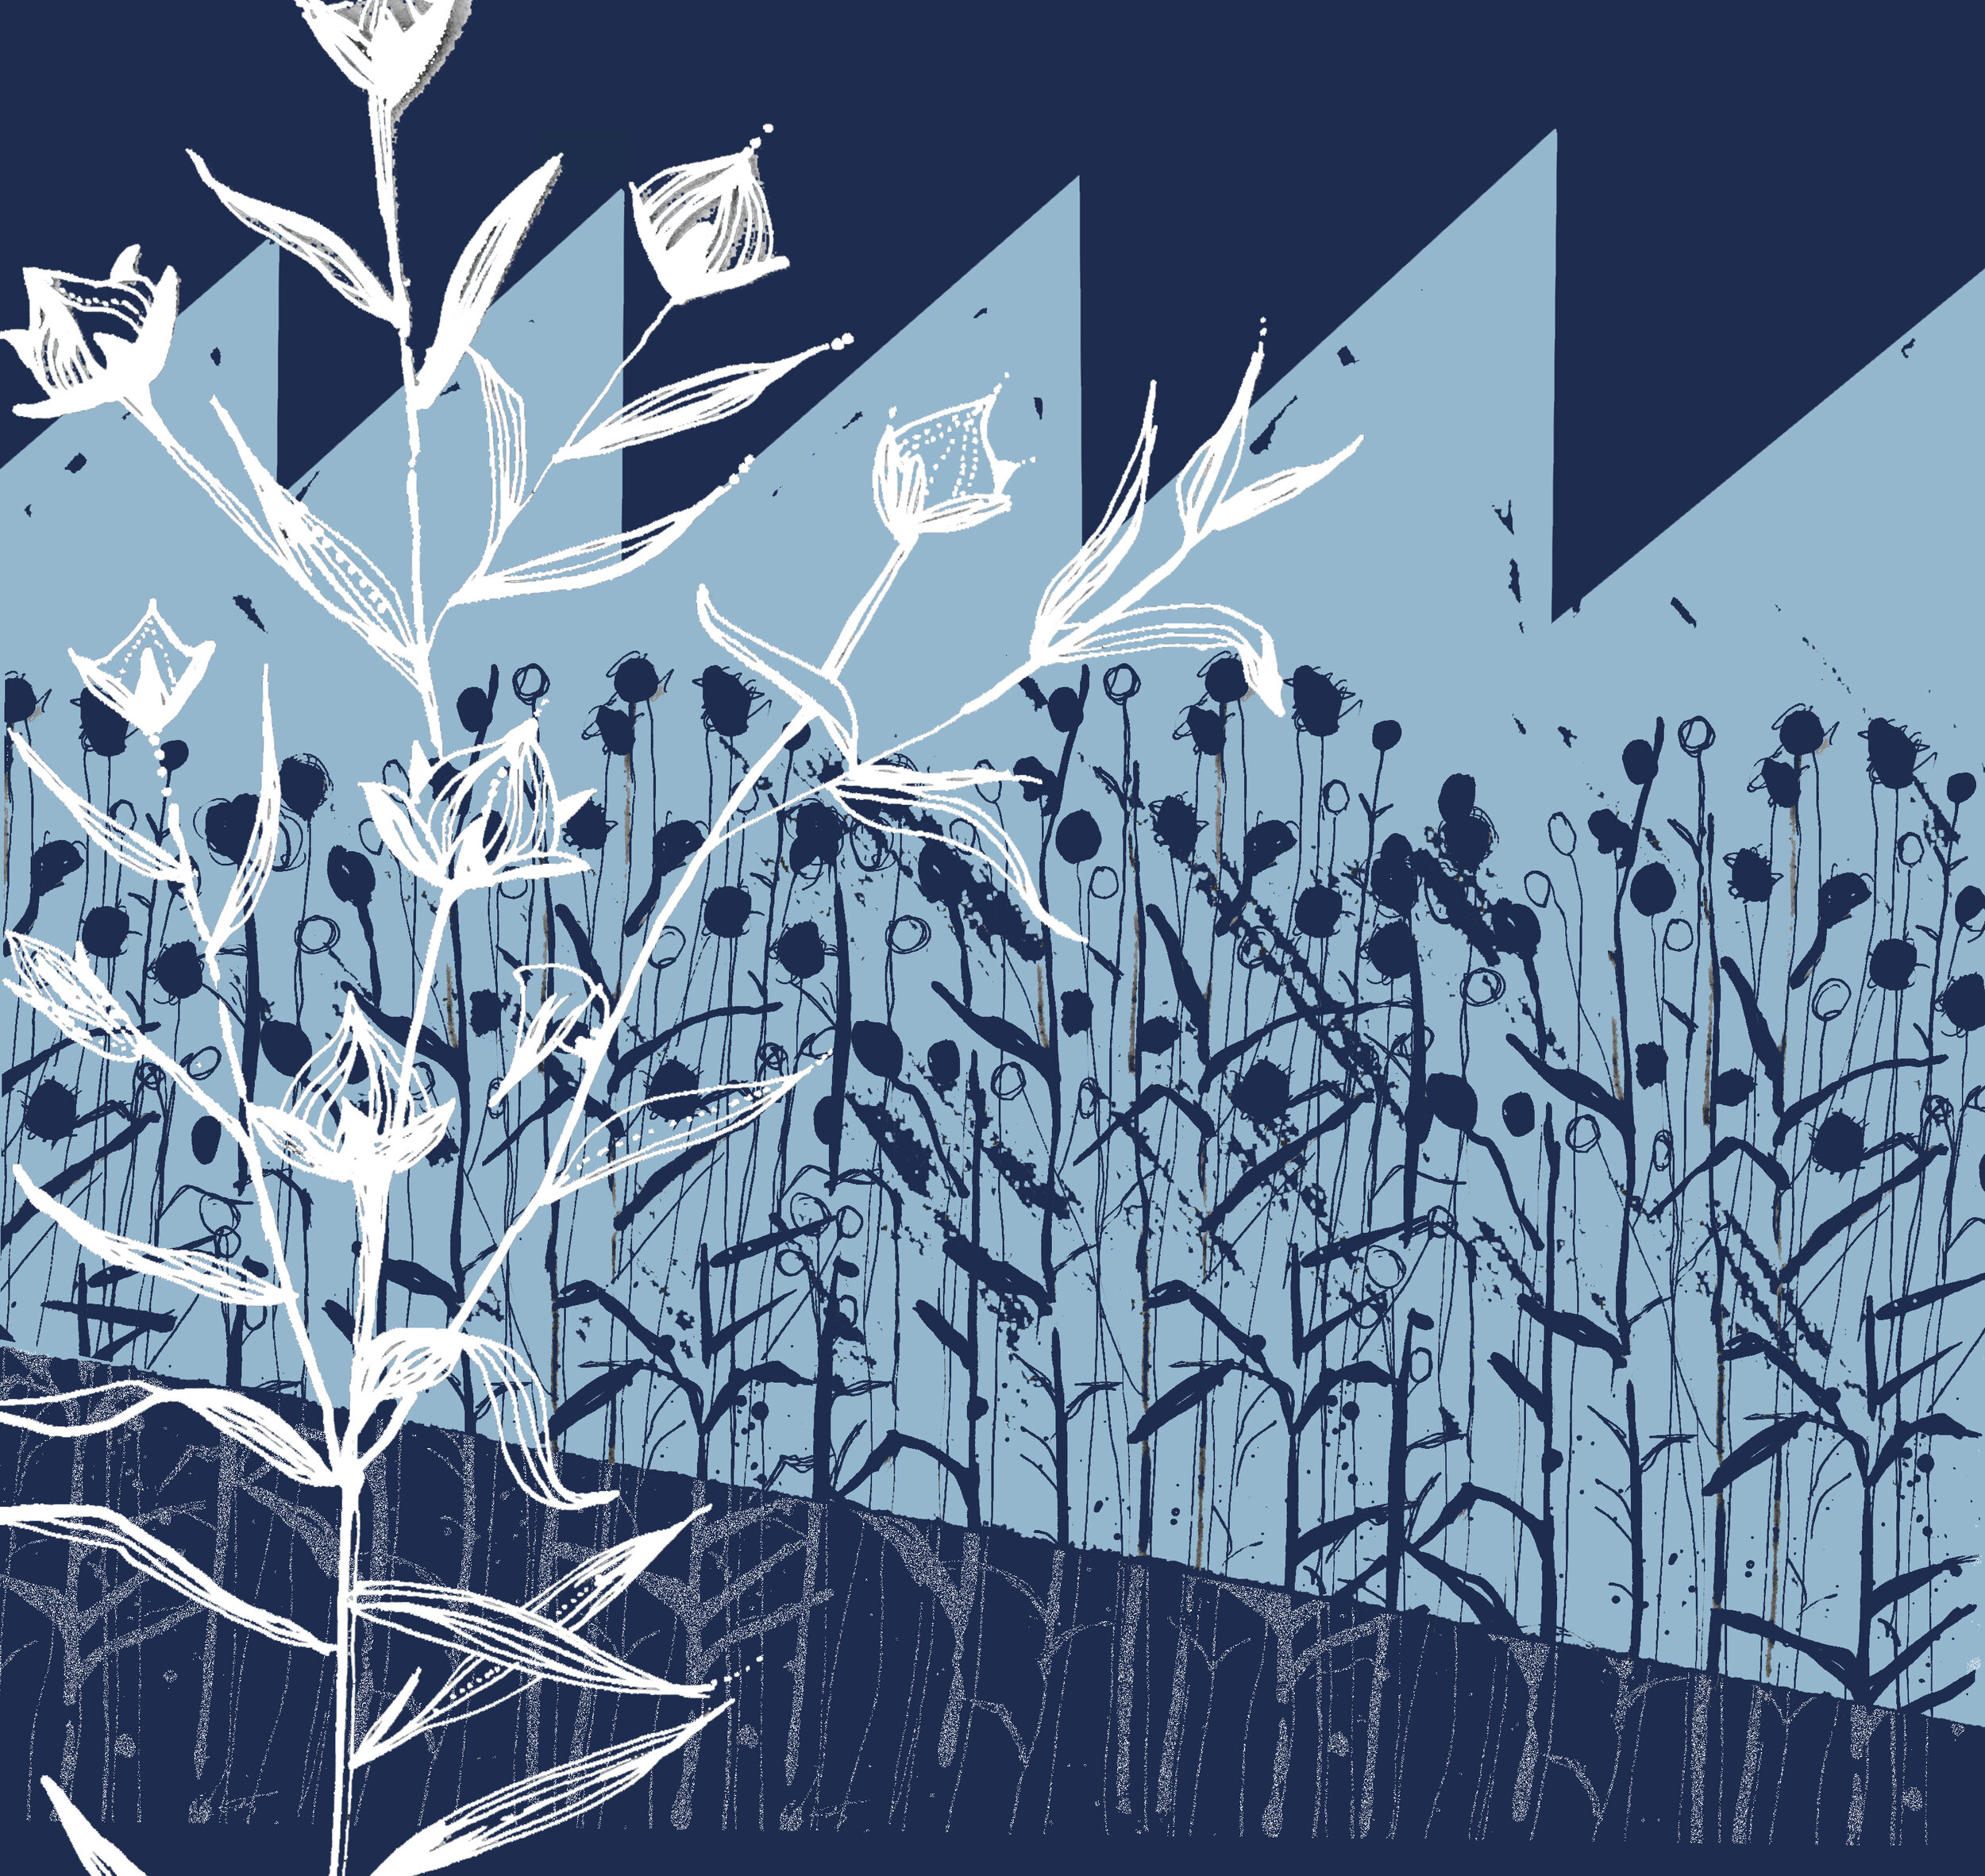 flax fields2.jpg